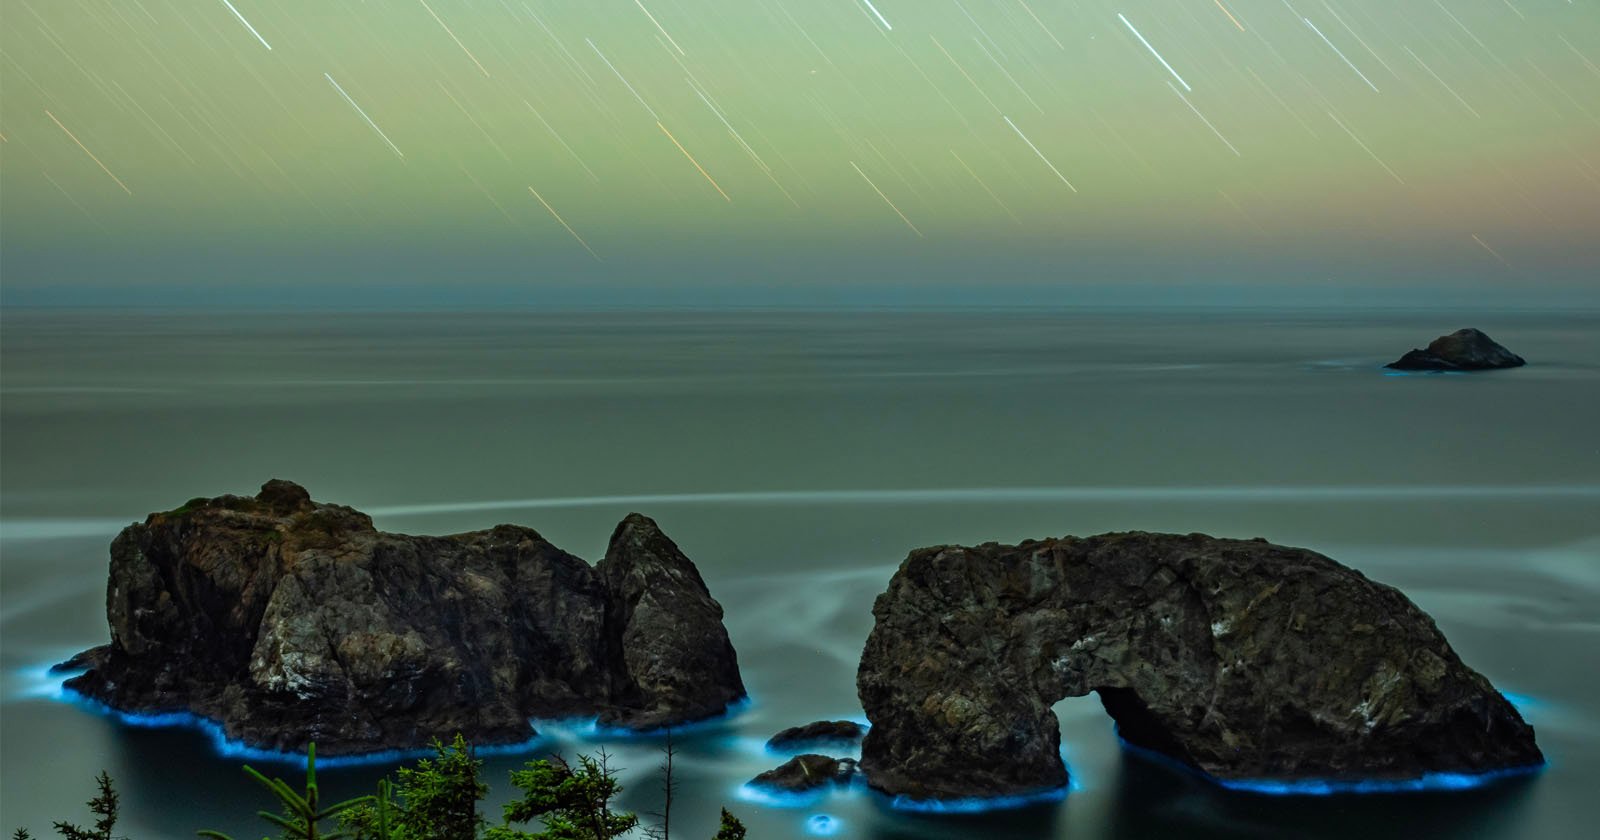  photos bioluminescent rocks glowing off coast oregon 